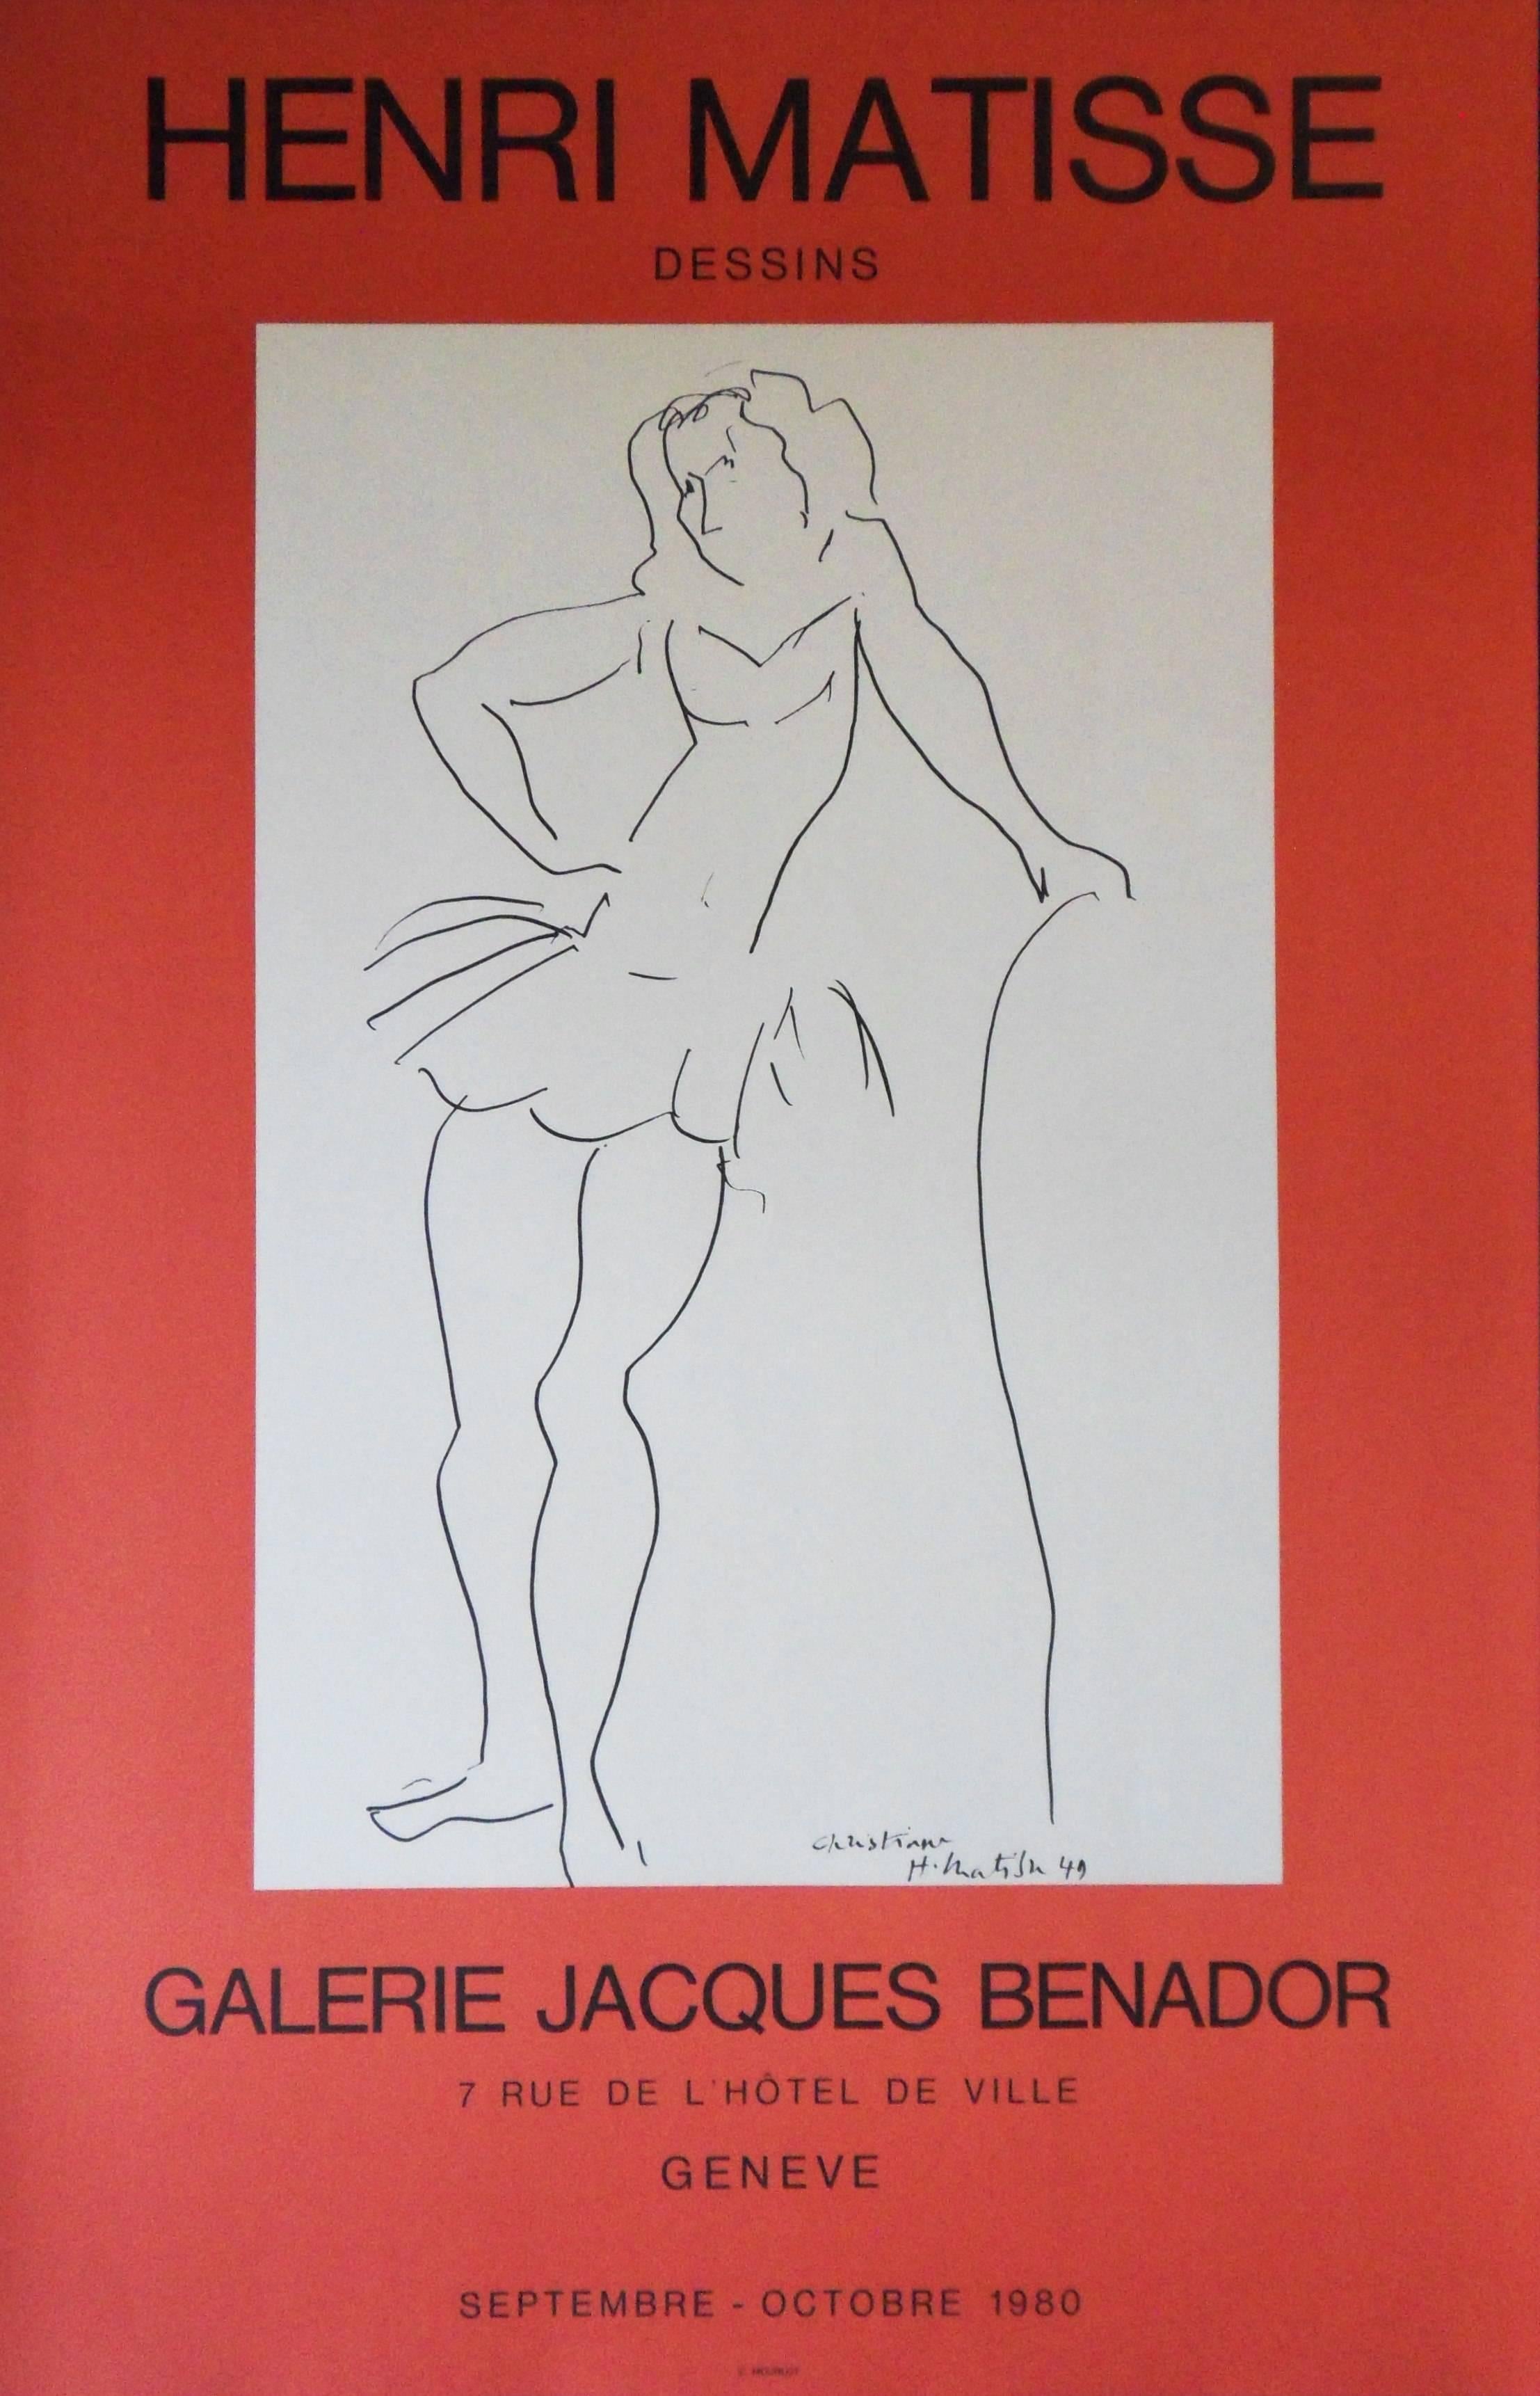 Henri Matisse Figurative Print – Christiane: Tänzerin – Lithographieplakat – Galerie Jacques Benador, #Mourlot